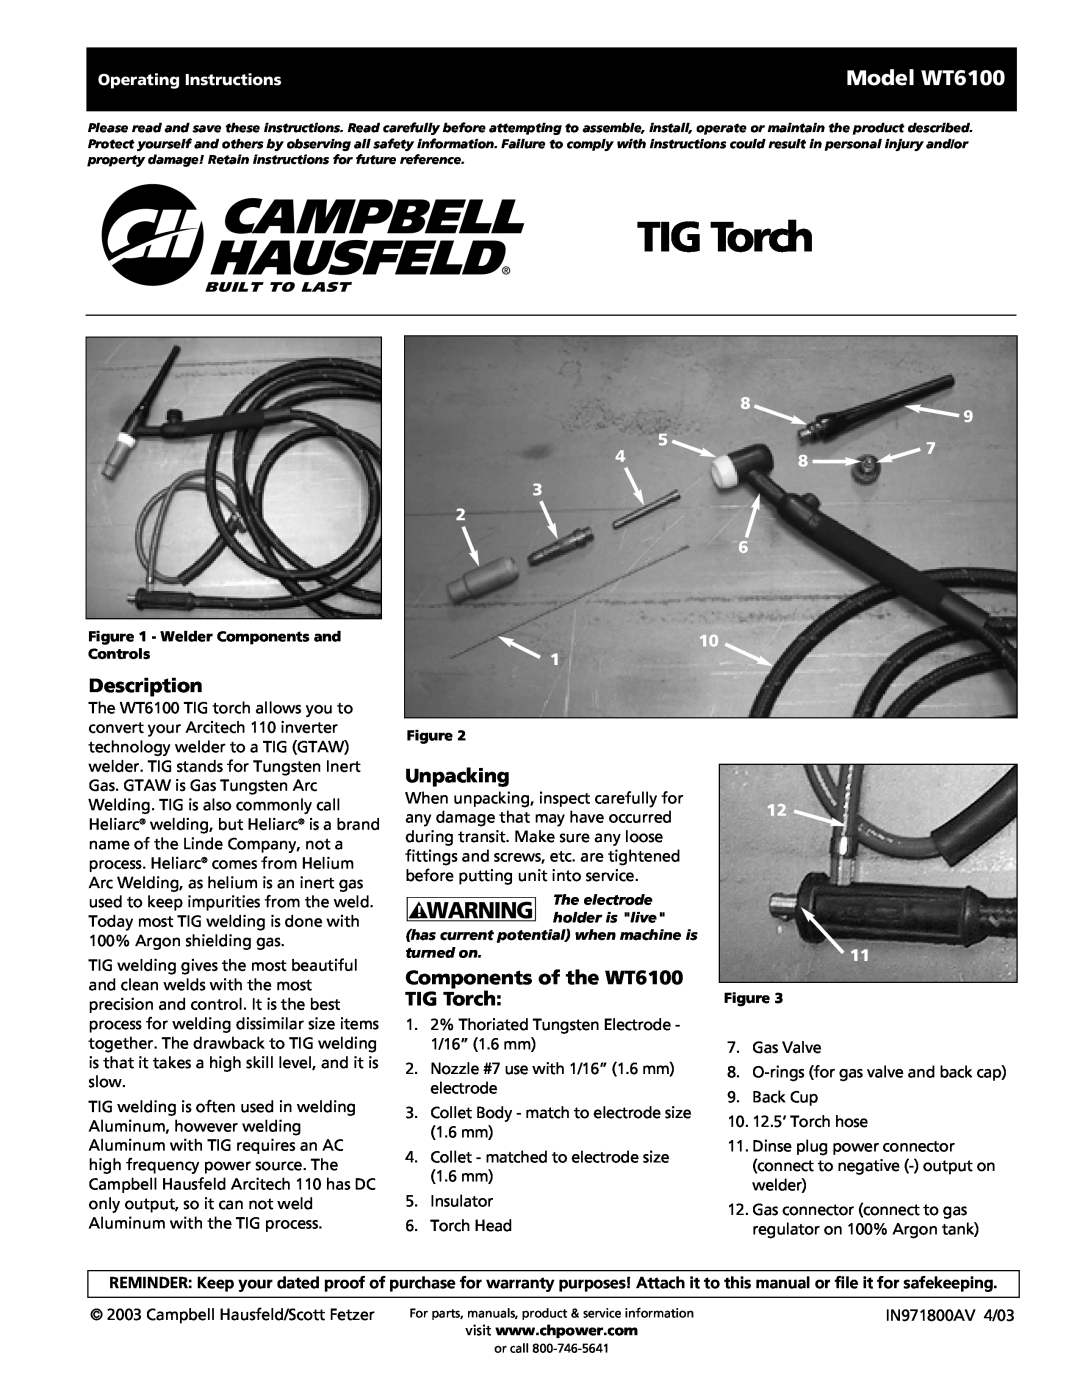 Campbell Hausfeld operating instructions TIG Torch, Model WT6100, Description, Unpacking, Operating Instructions 